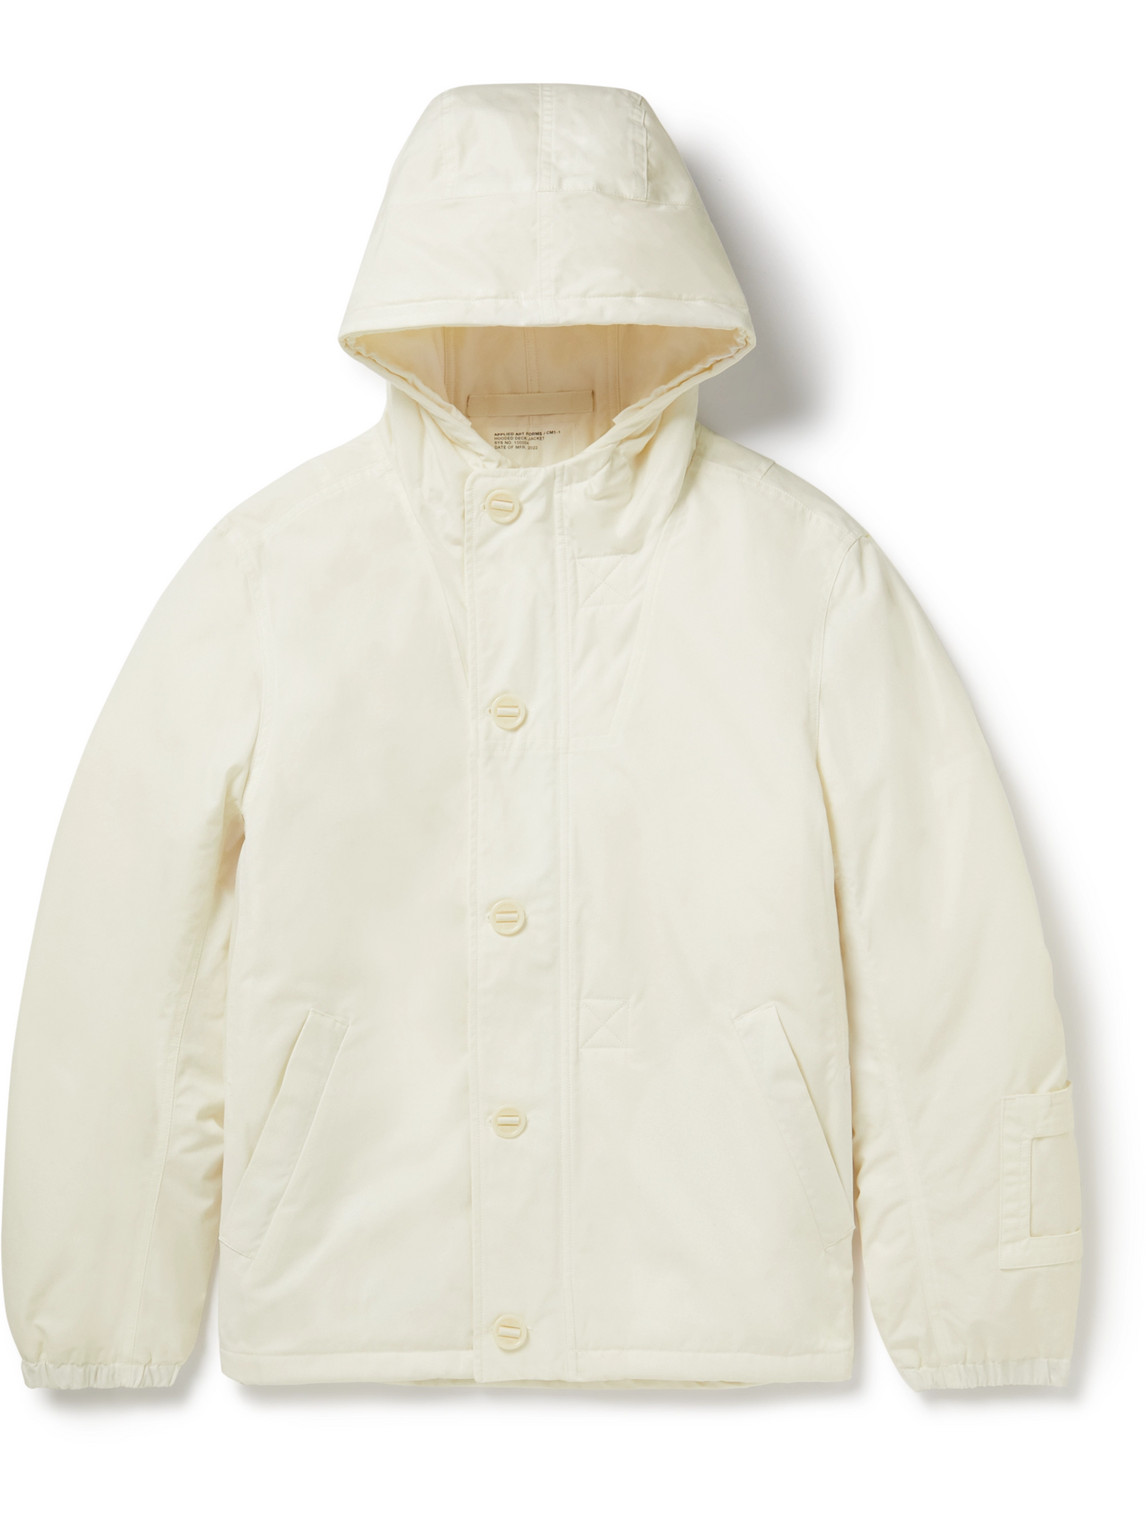 Applied Art Forms CM1-1 Padded Cotton-Gabardine Hooded Jacket